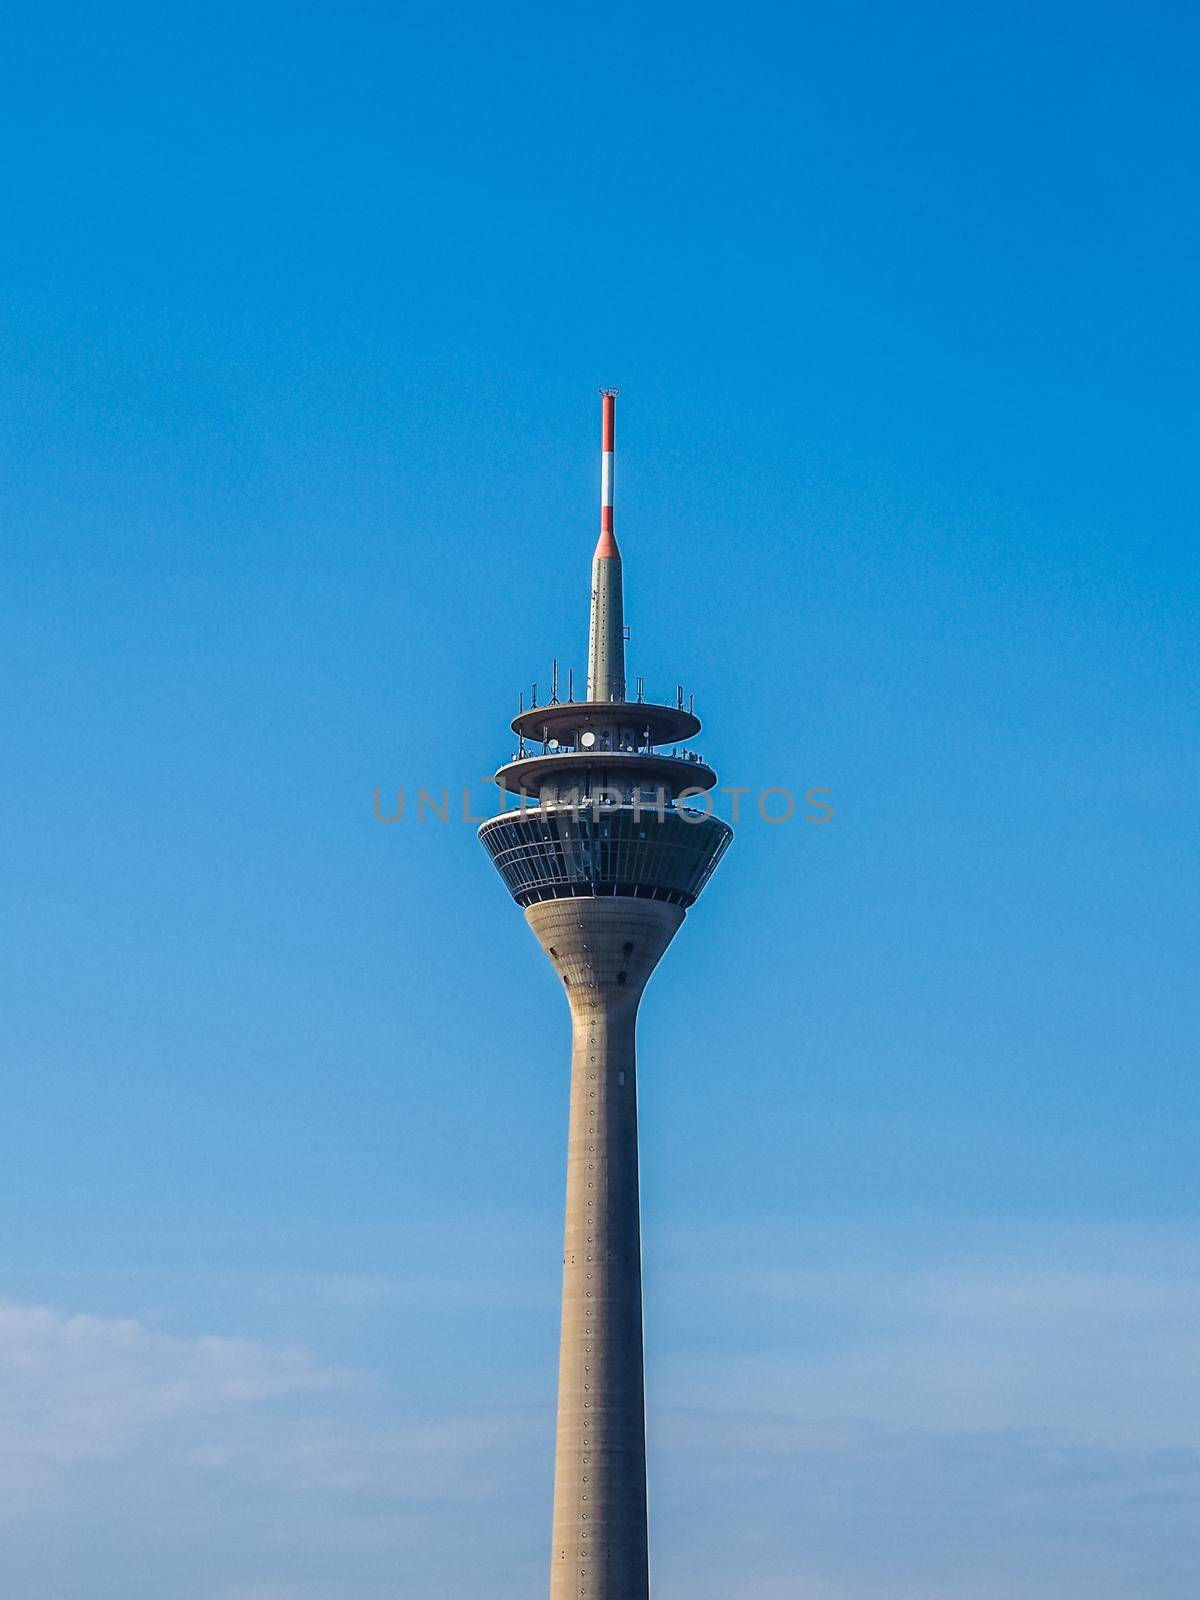 HDR Rheinturm TV tower in Duesseldorf by claudiodivizia